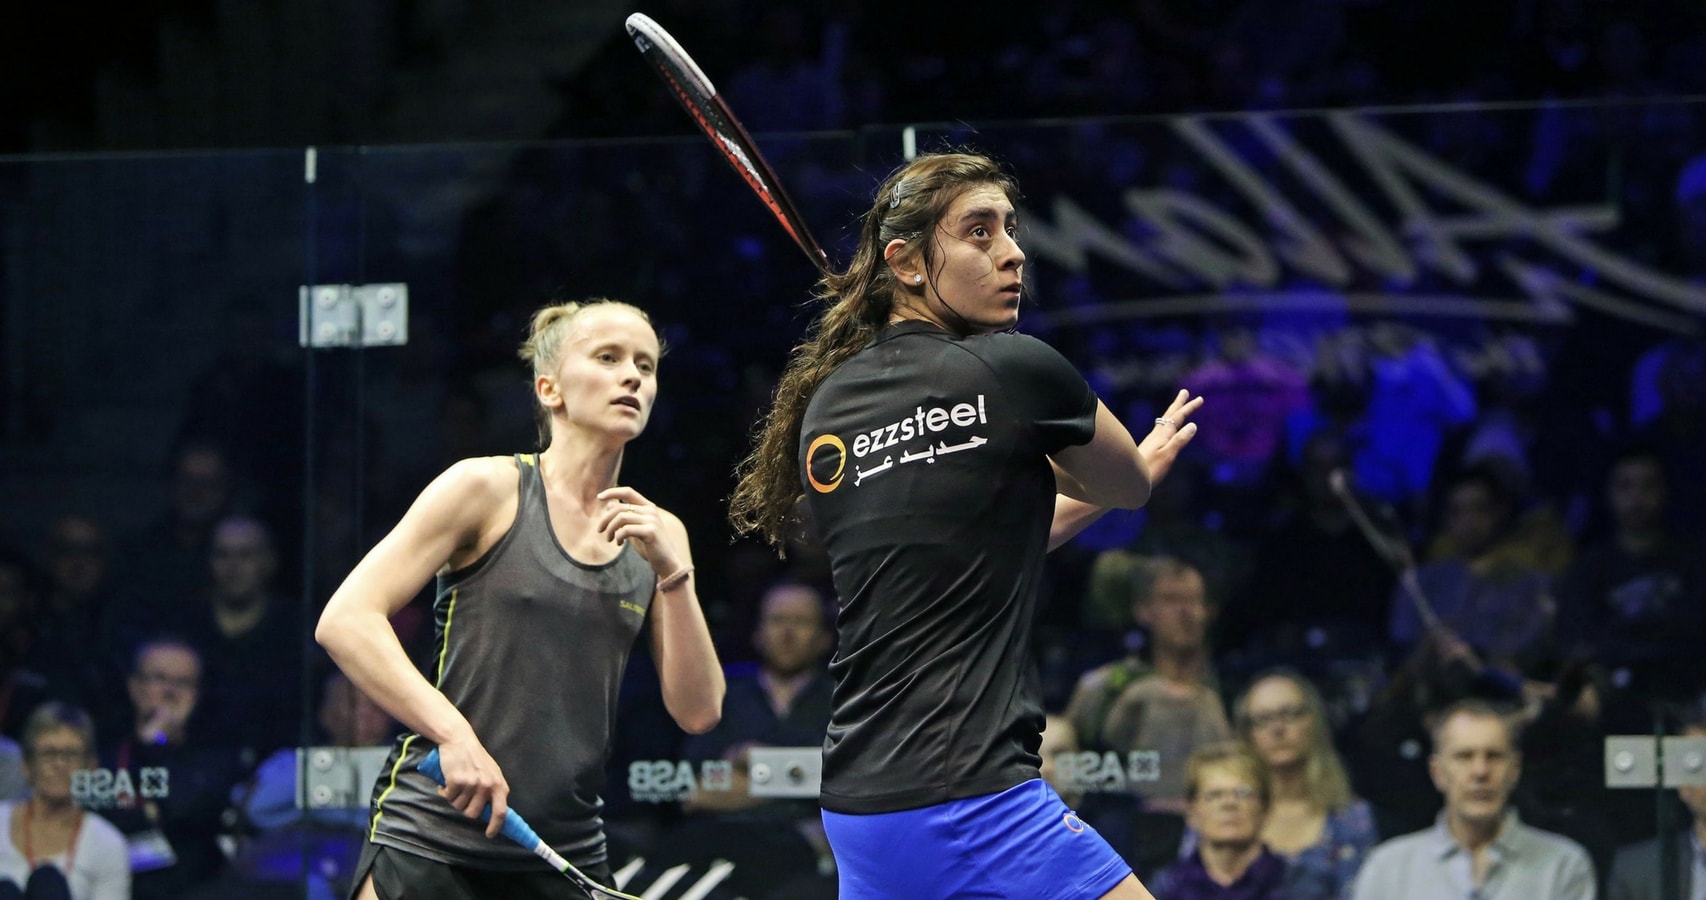 Emily Whitlock was beaten 3-0 by Nour El Sherbini in the Allam British Open quarter final